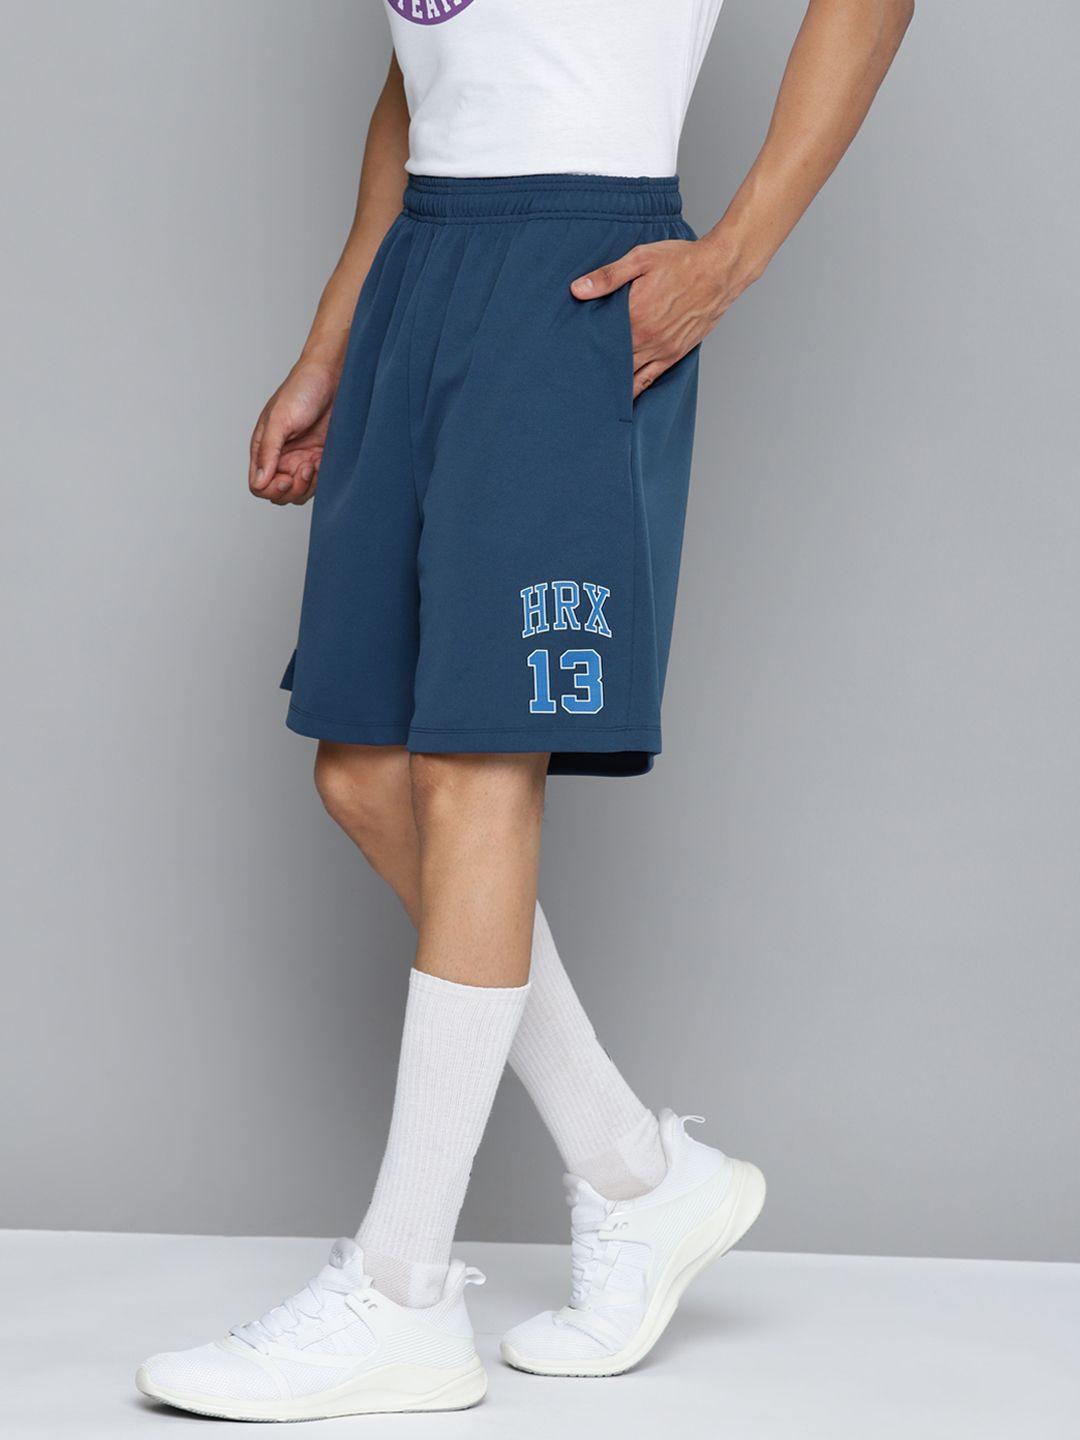 hrx by hrithik roshan men rapid-dry high-rise basket ball shorts